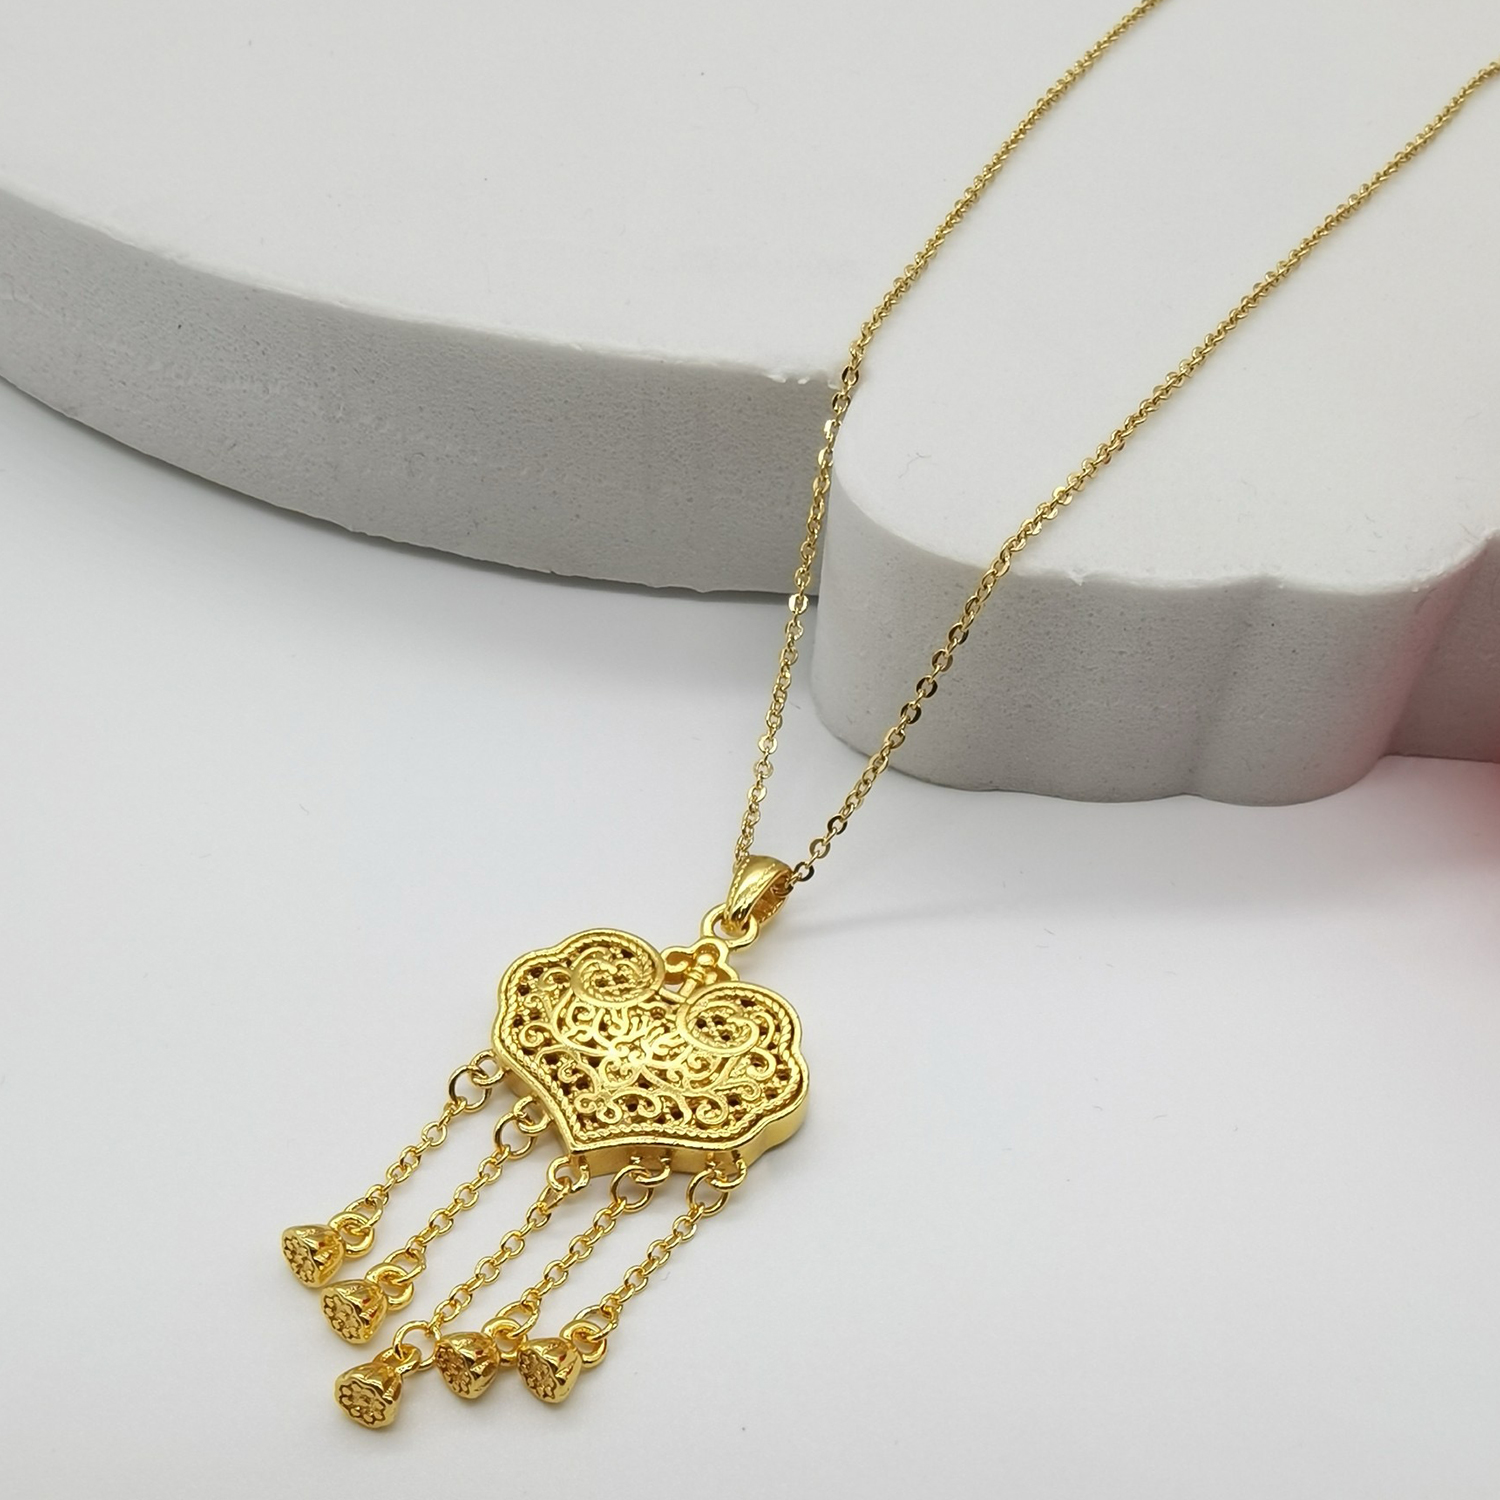 Alluvial gold vacuum electroplating 24K gold longevity lock tassel necklace